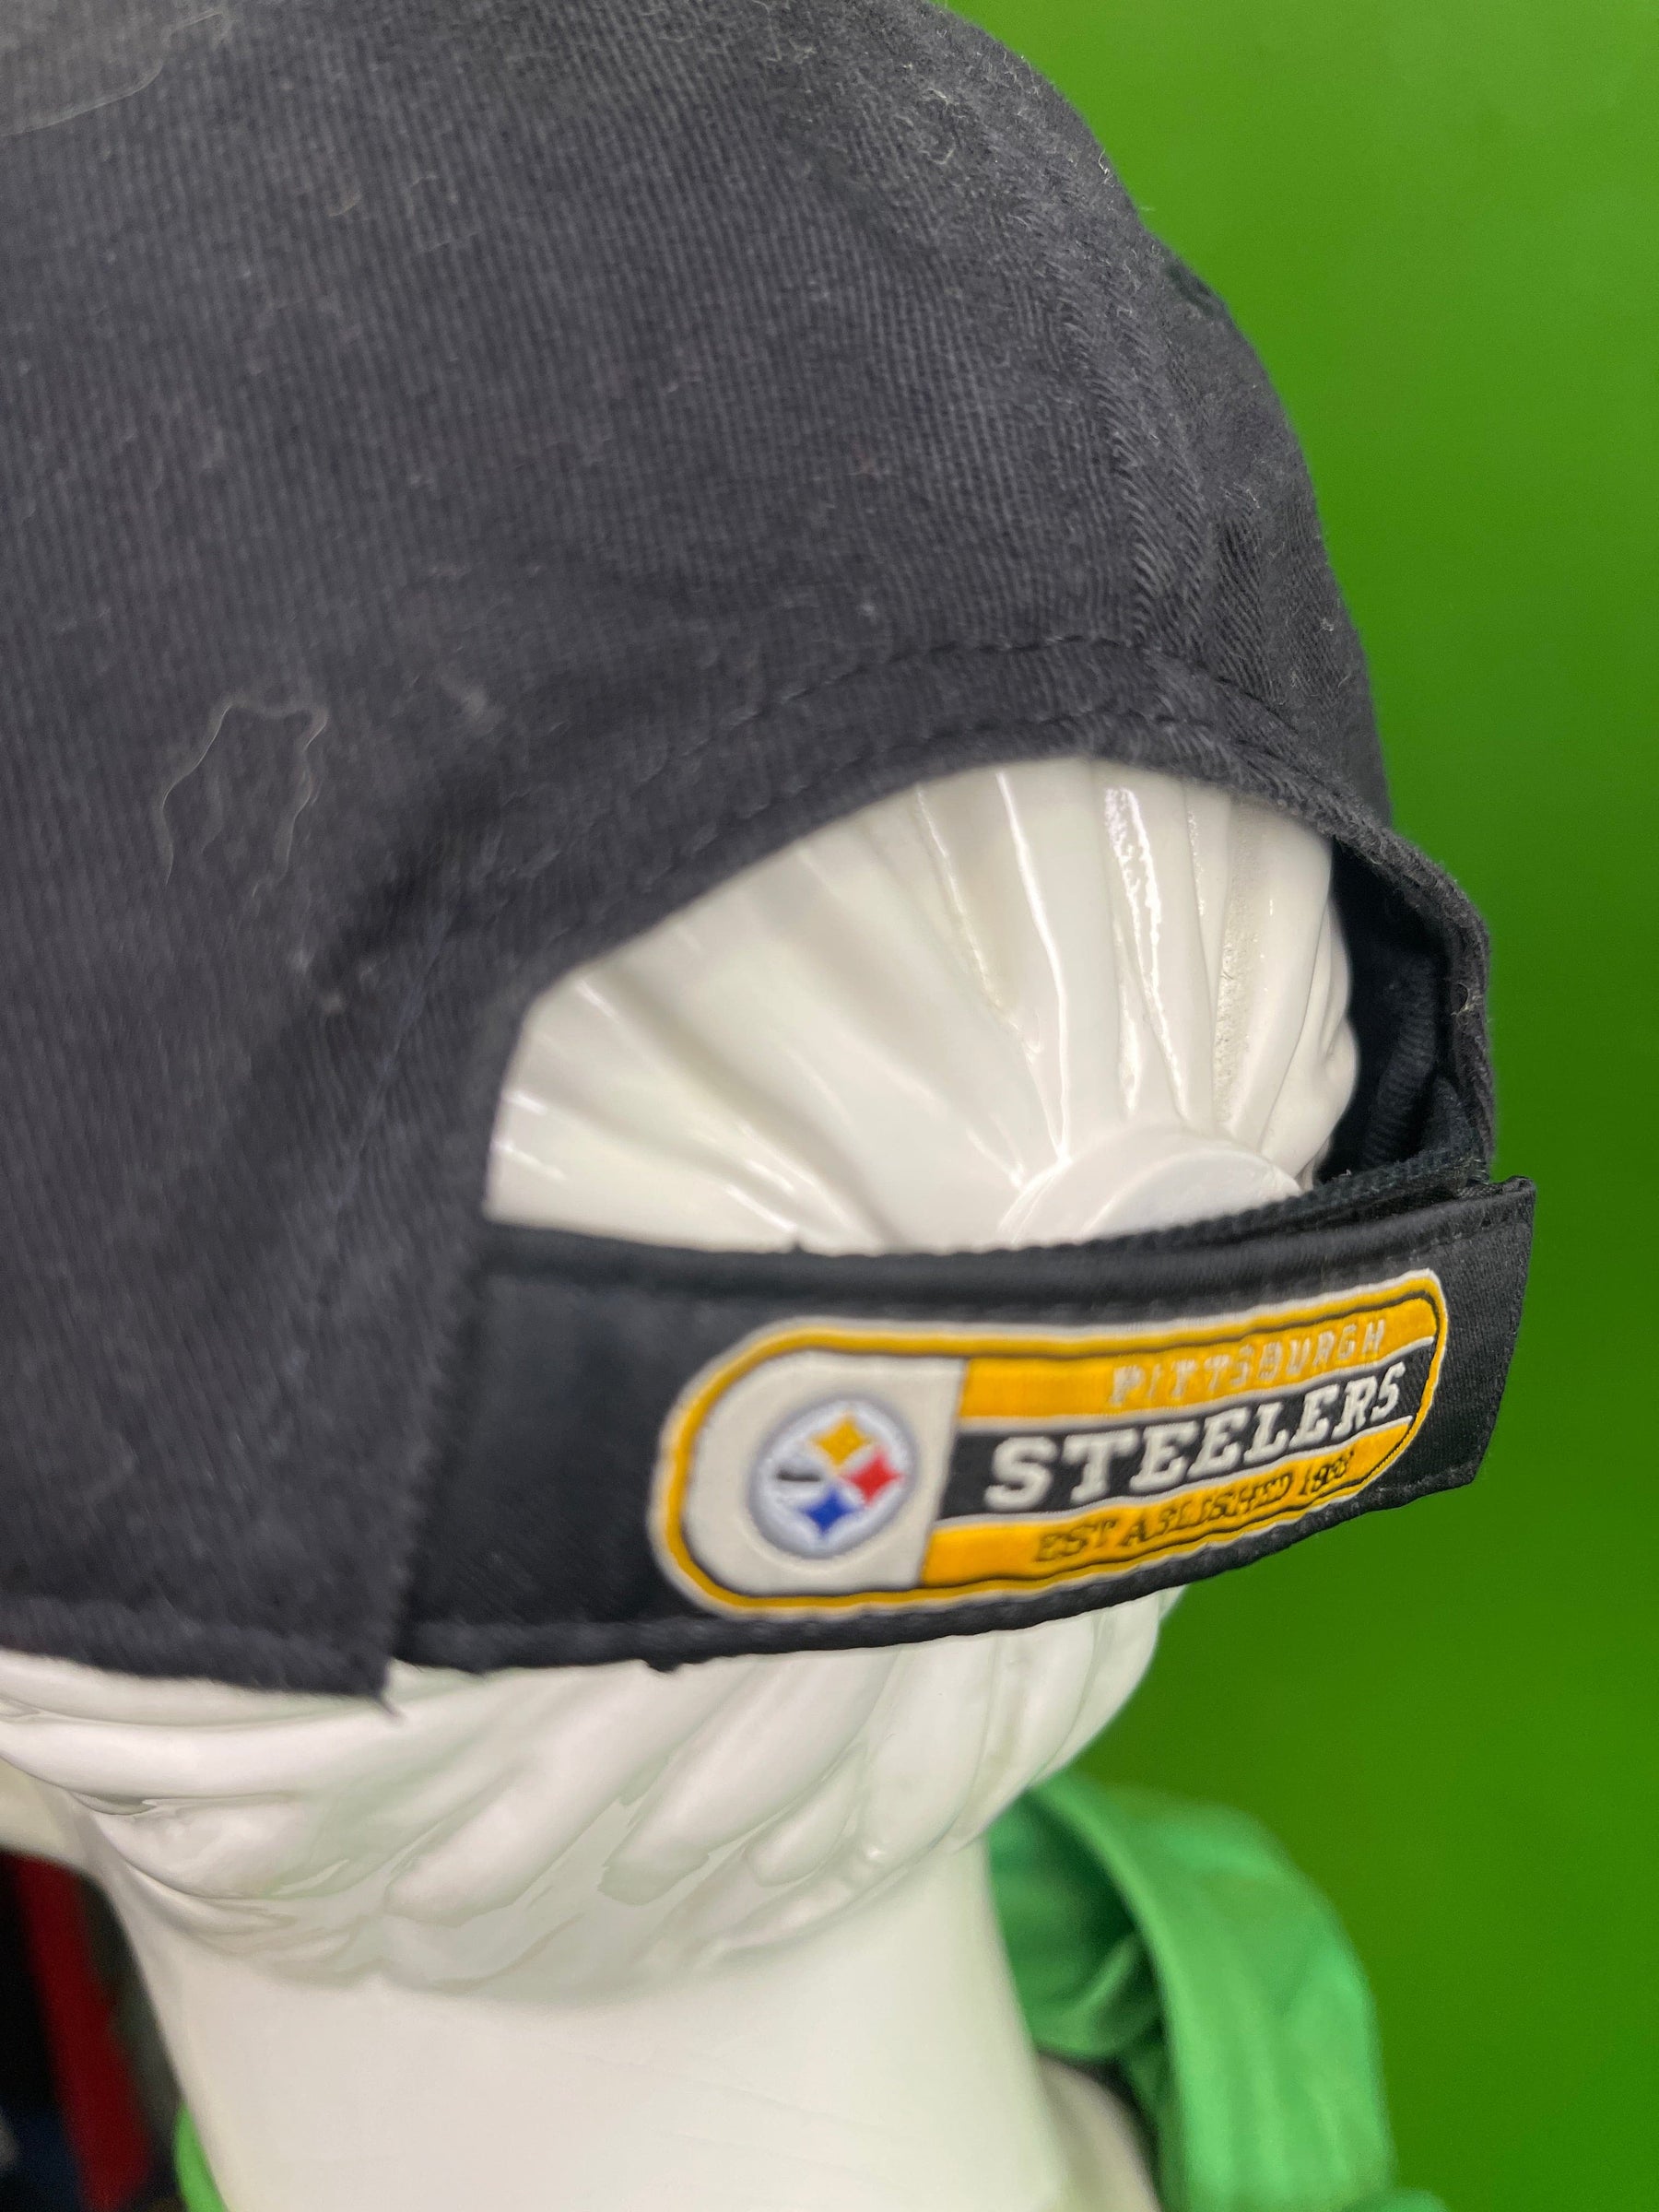 NFL Pittsburgh Steelers Reebok "Property Of" Hat/Cap OSFA